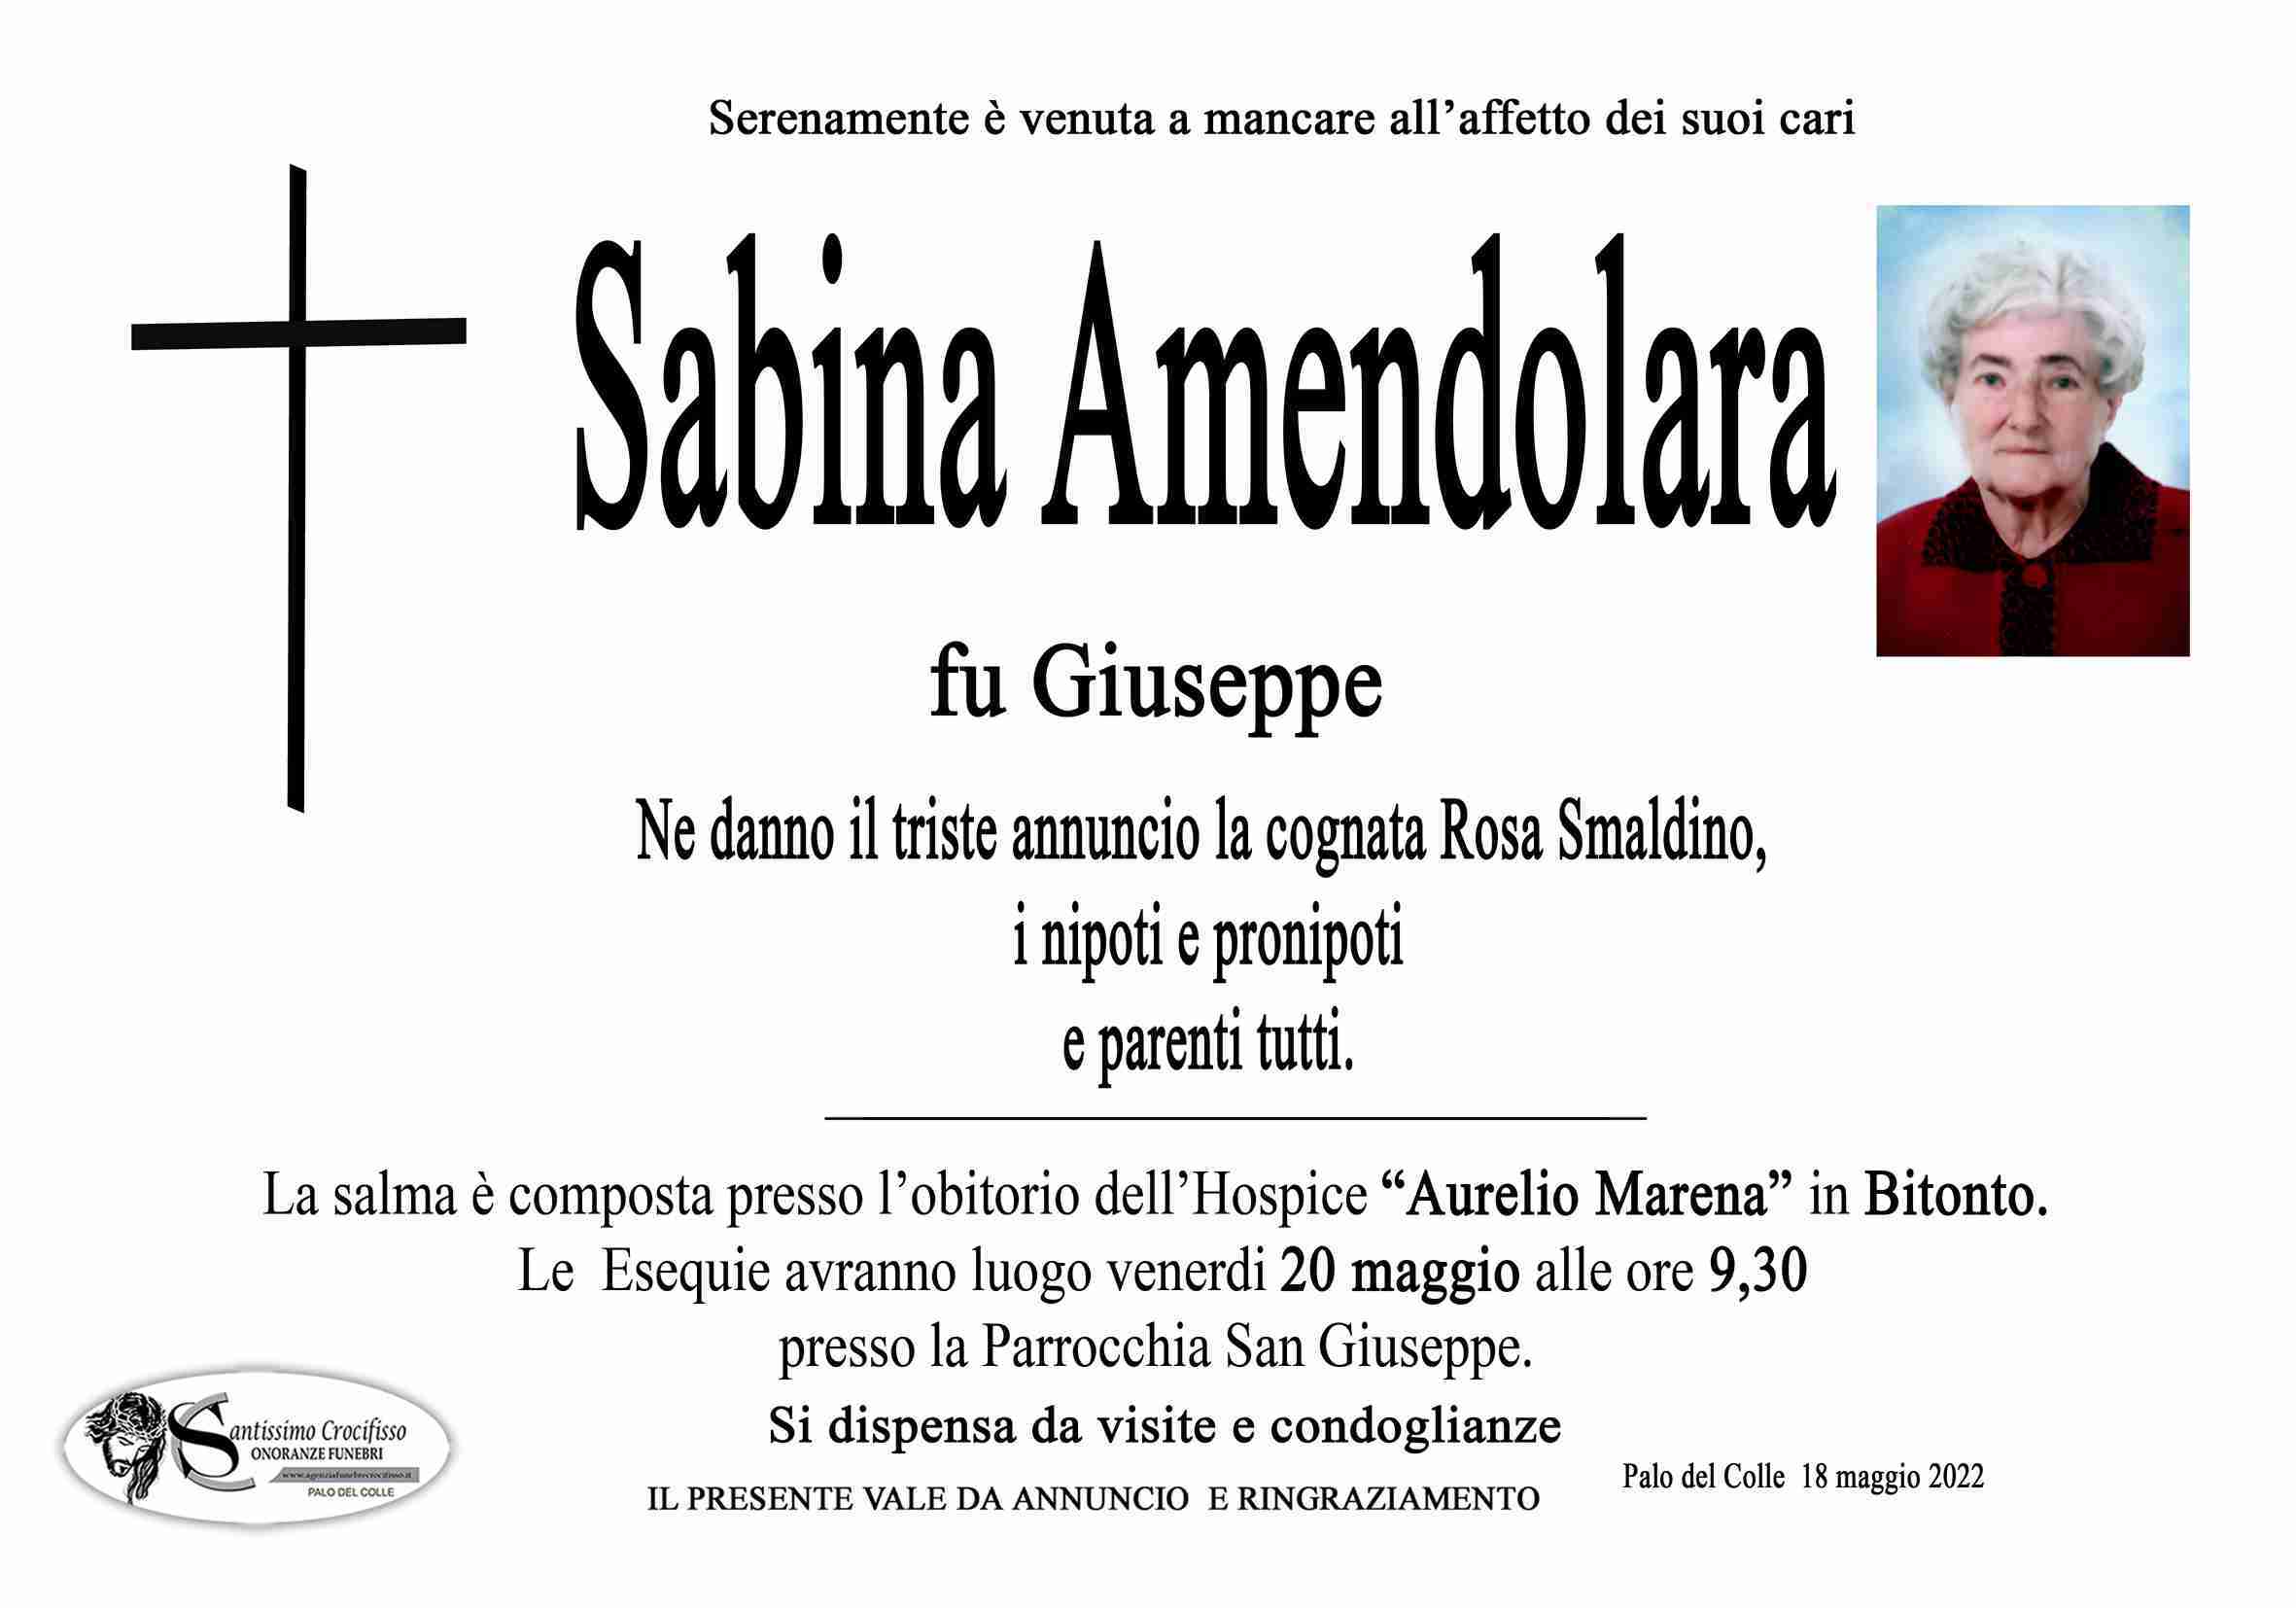 Sabina Amendolara